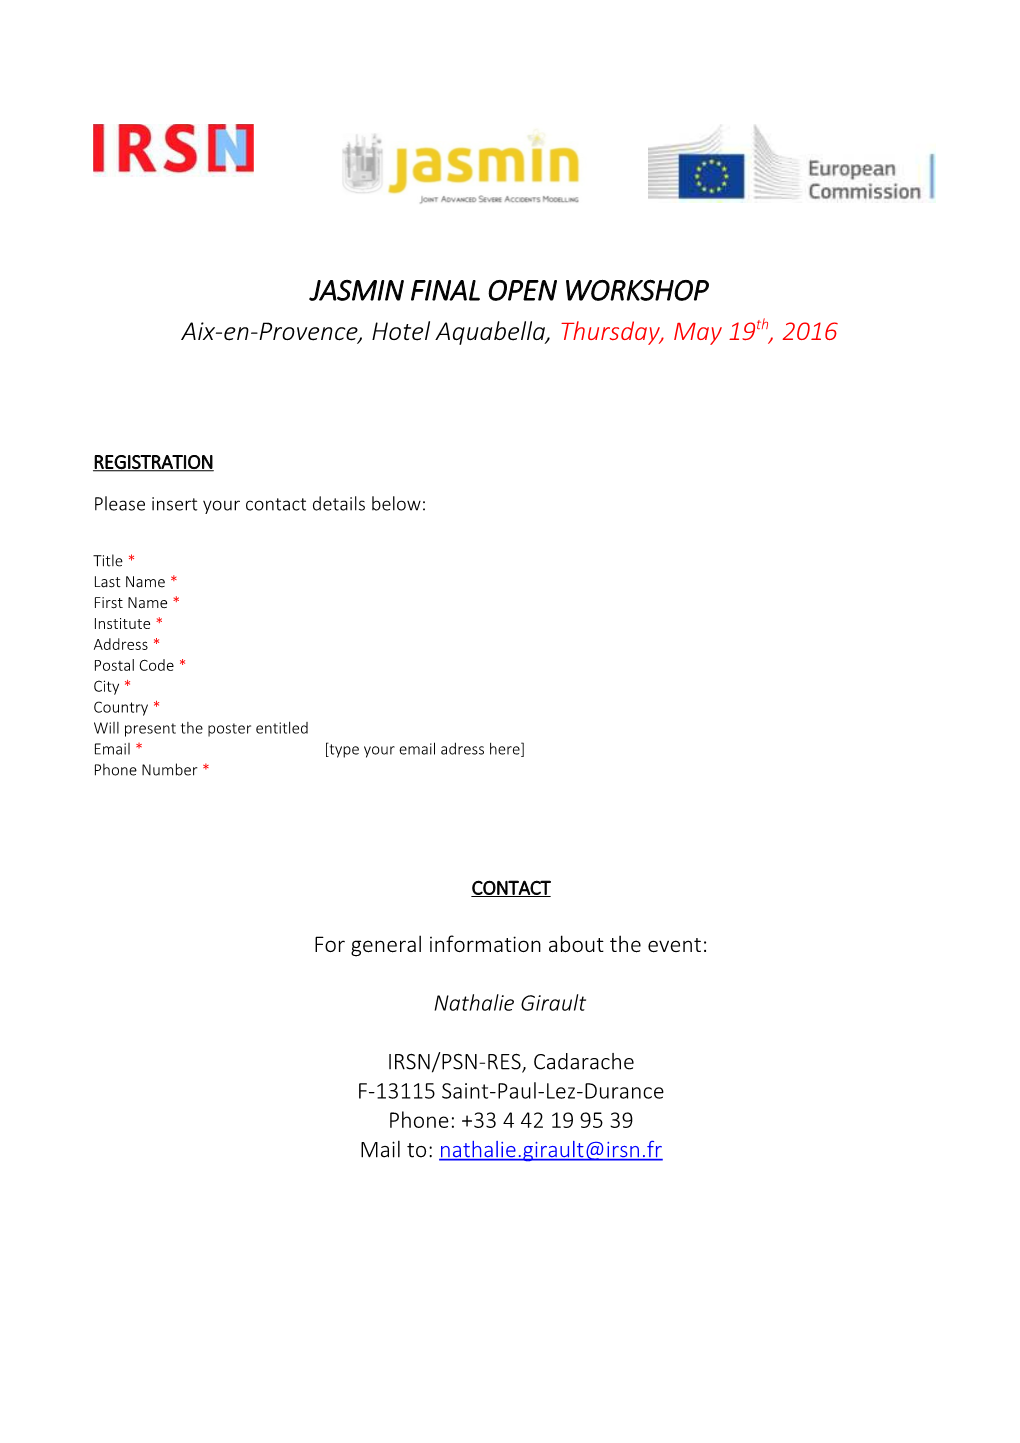 Jasmin Final Open Workshop